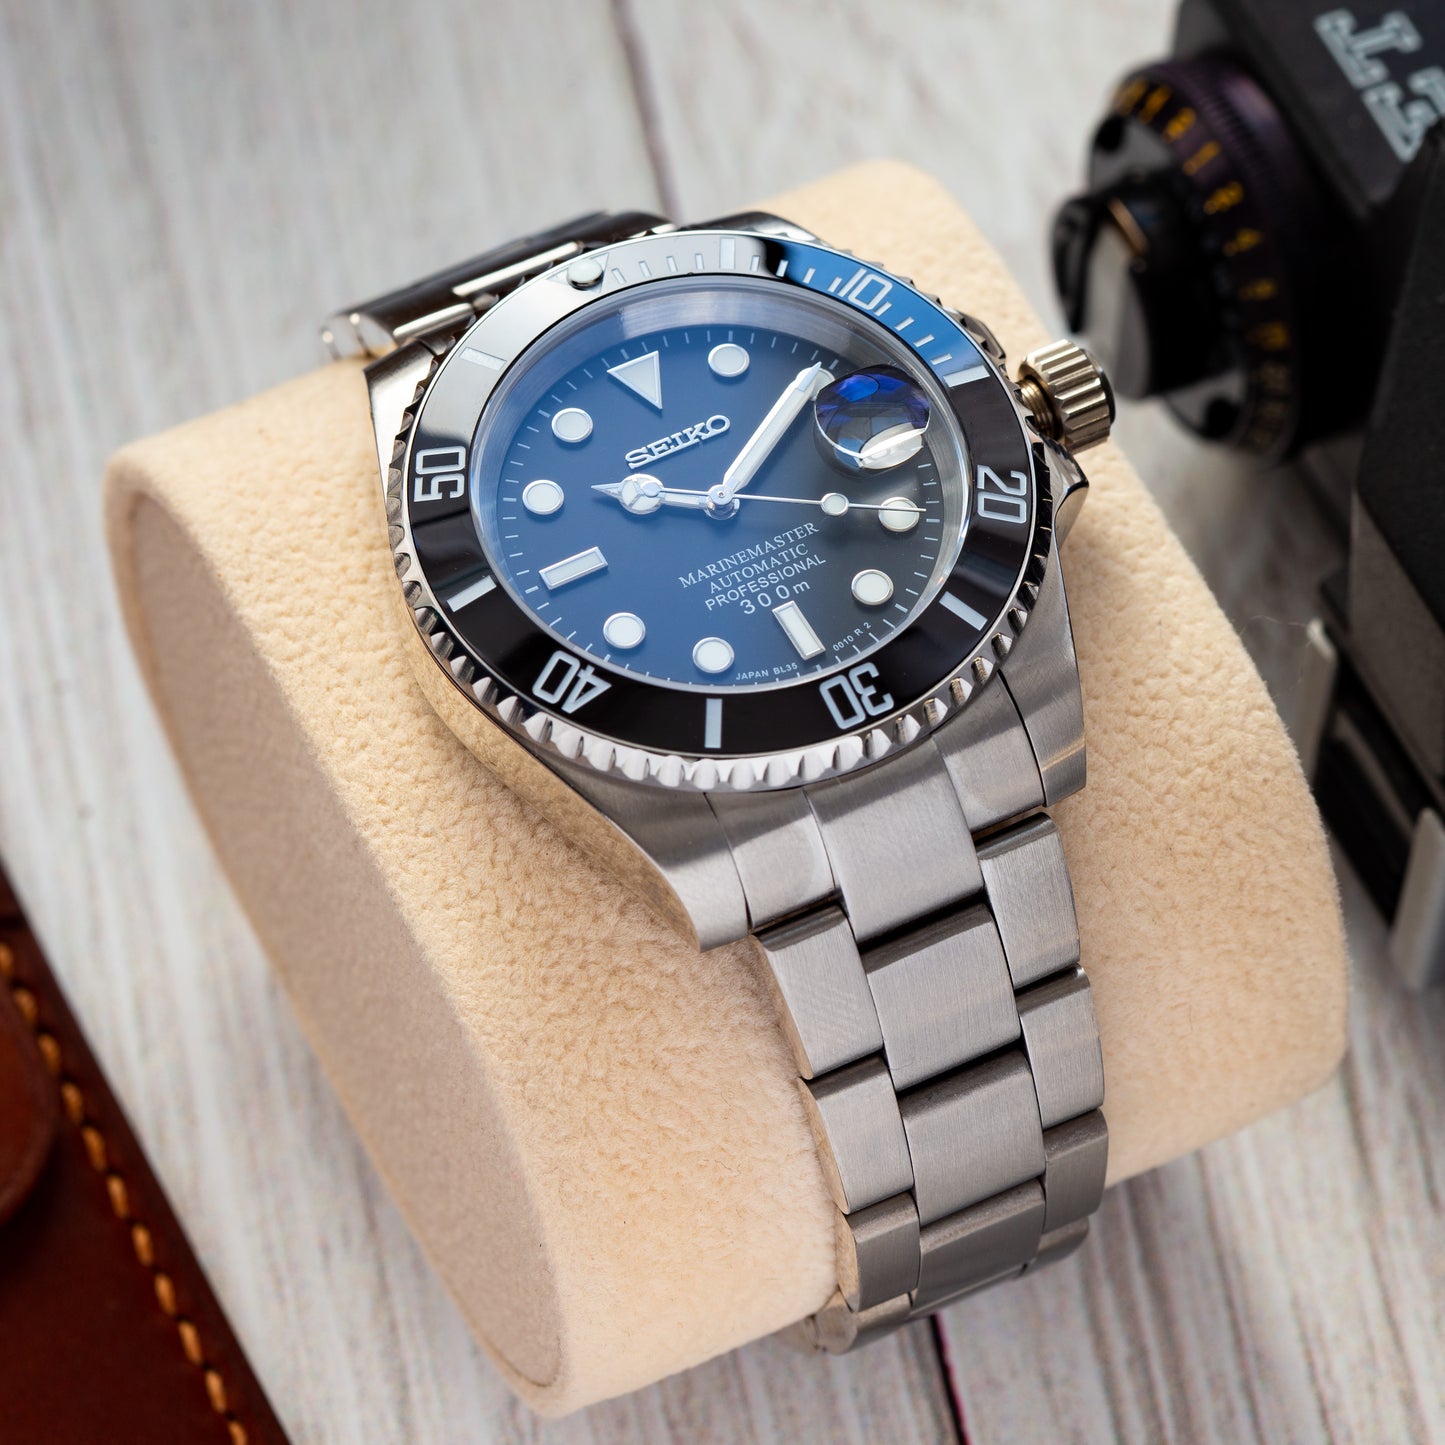 Seiko Mod Submariner Automatic Watch